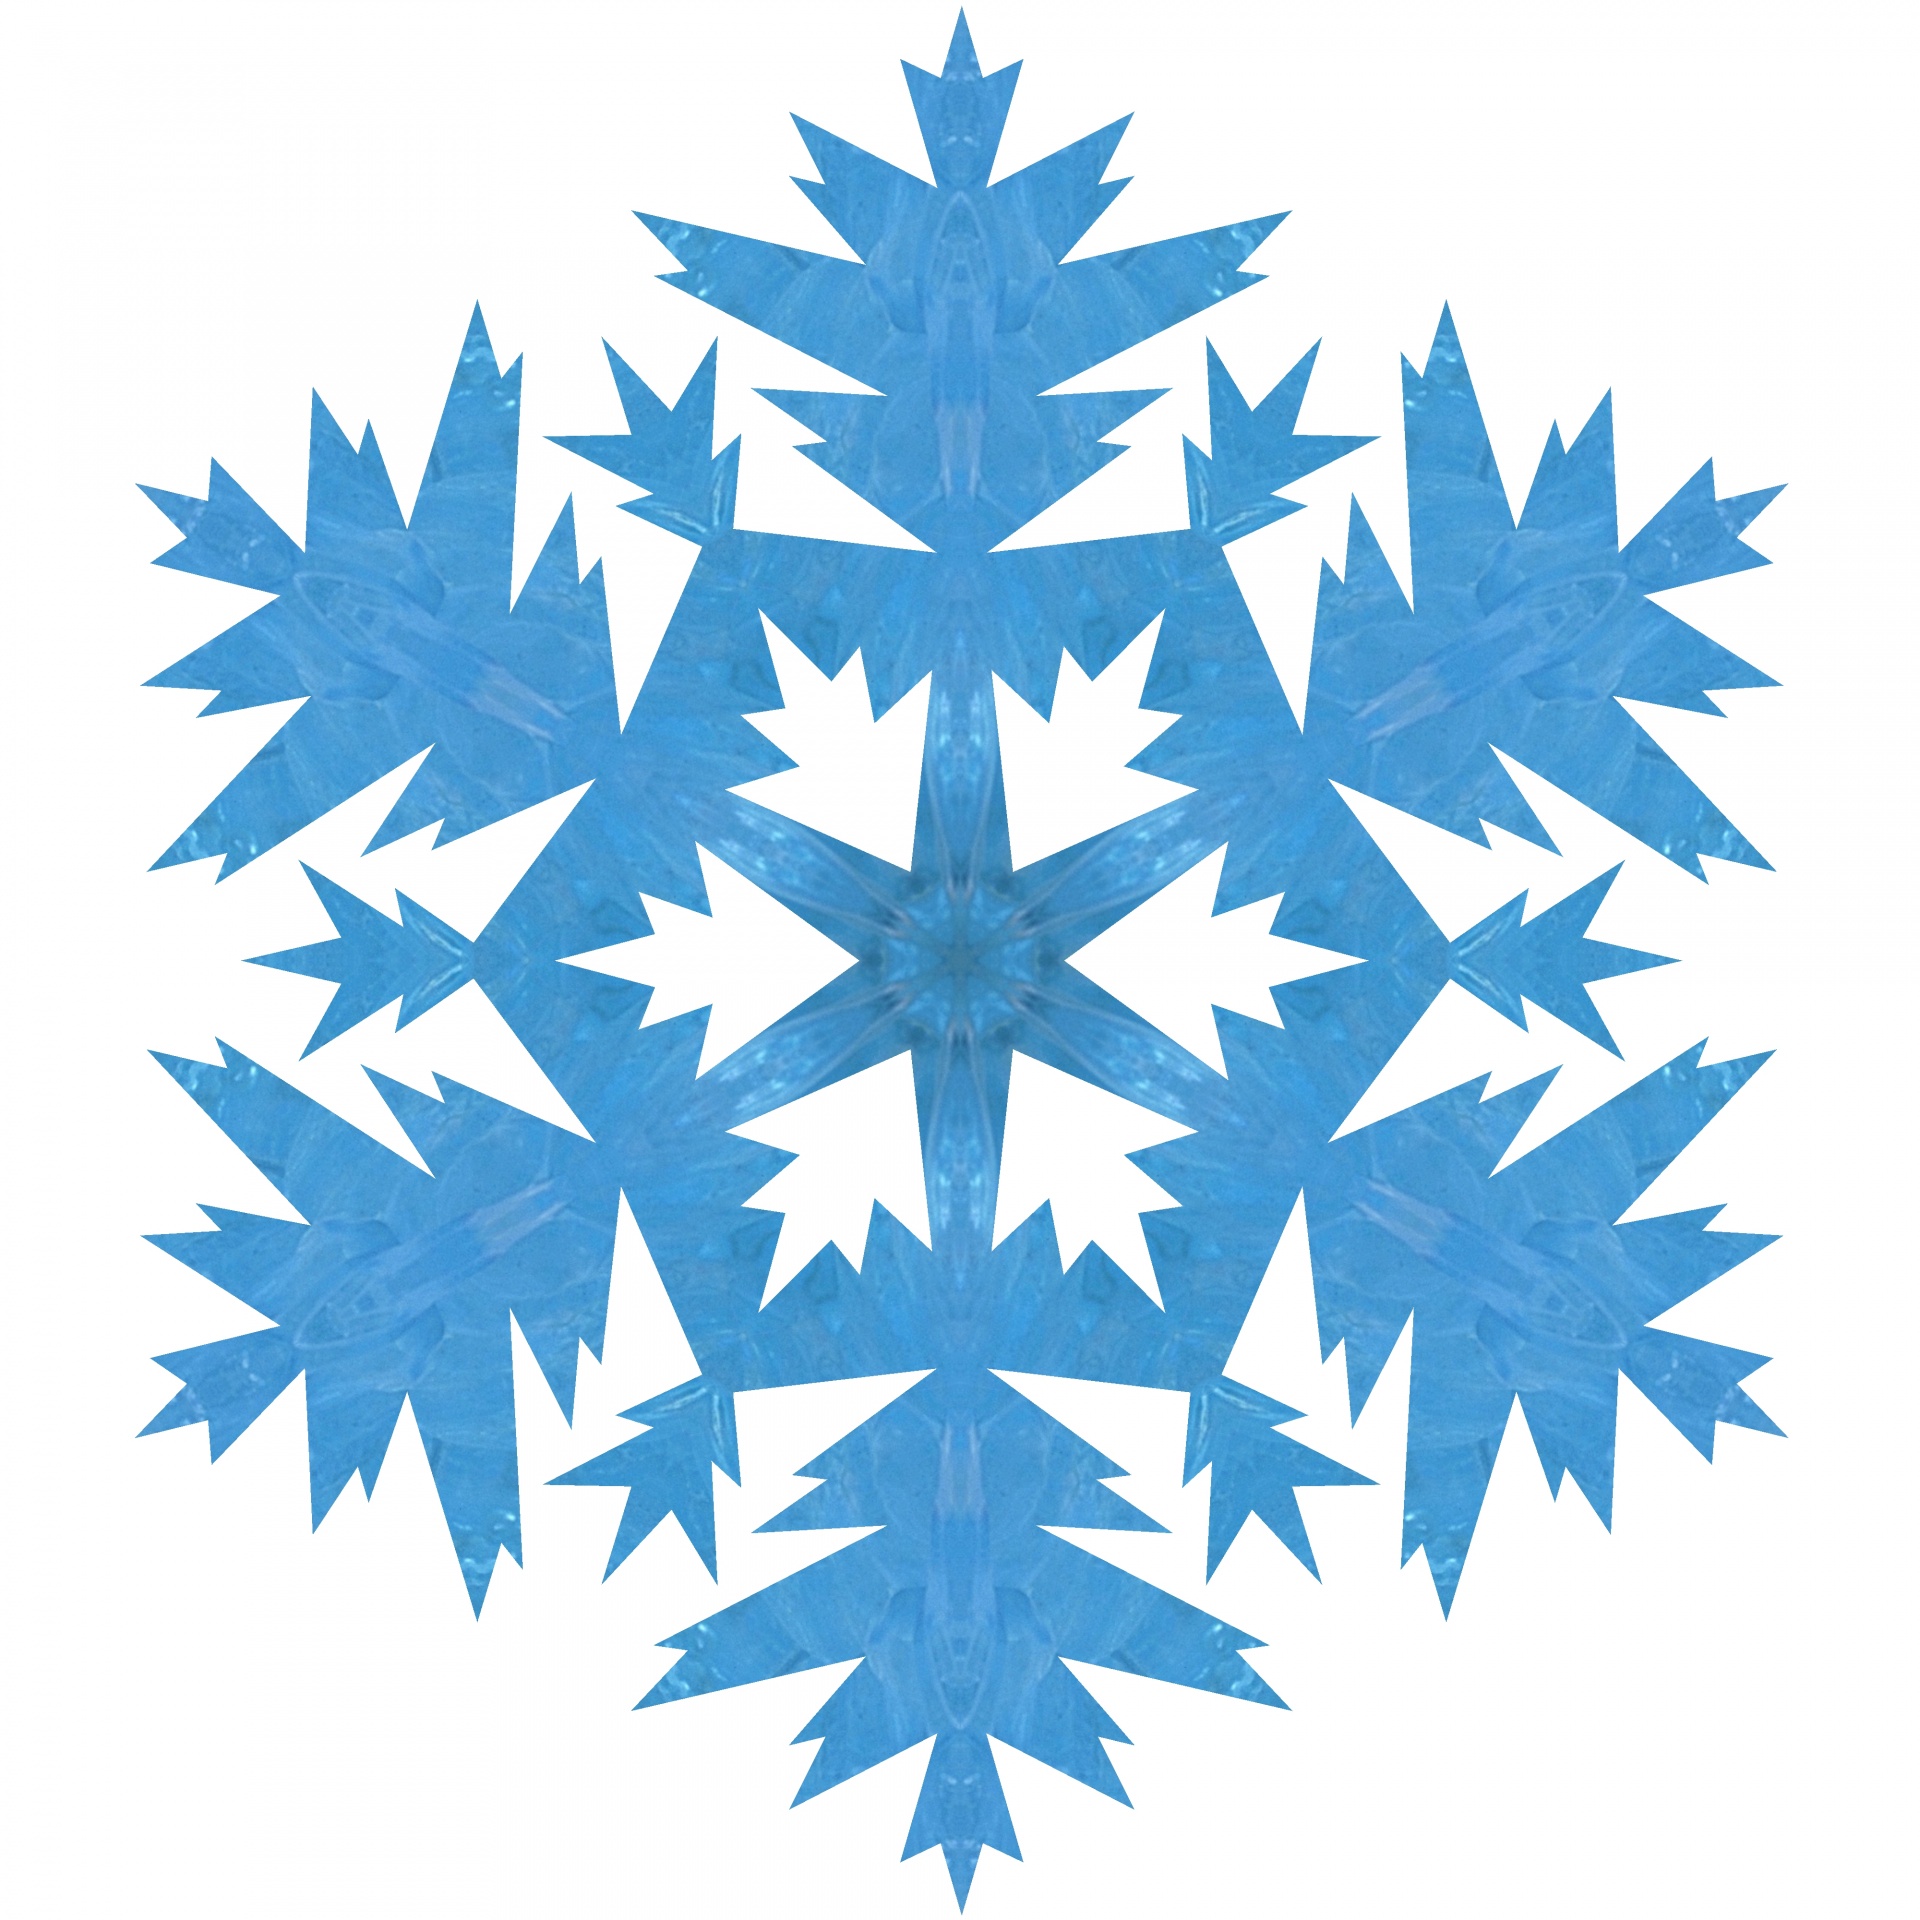 blue snowflake isolated on white background